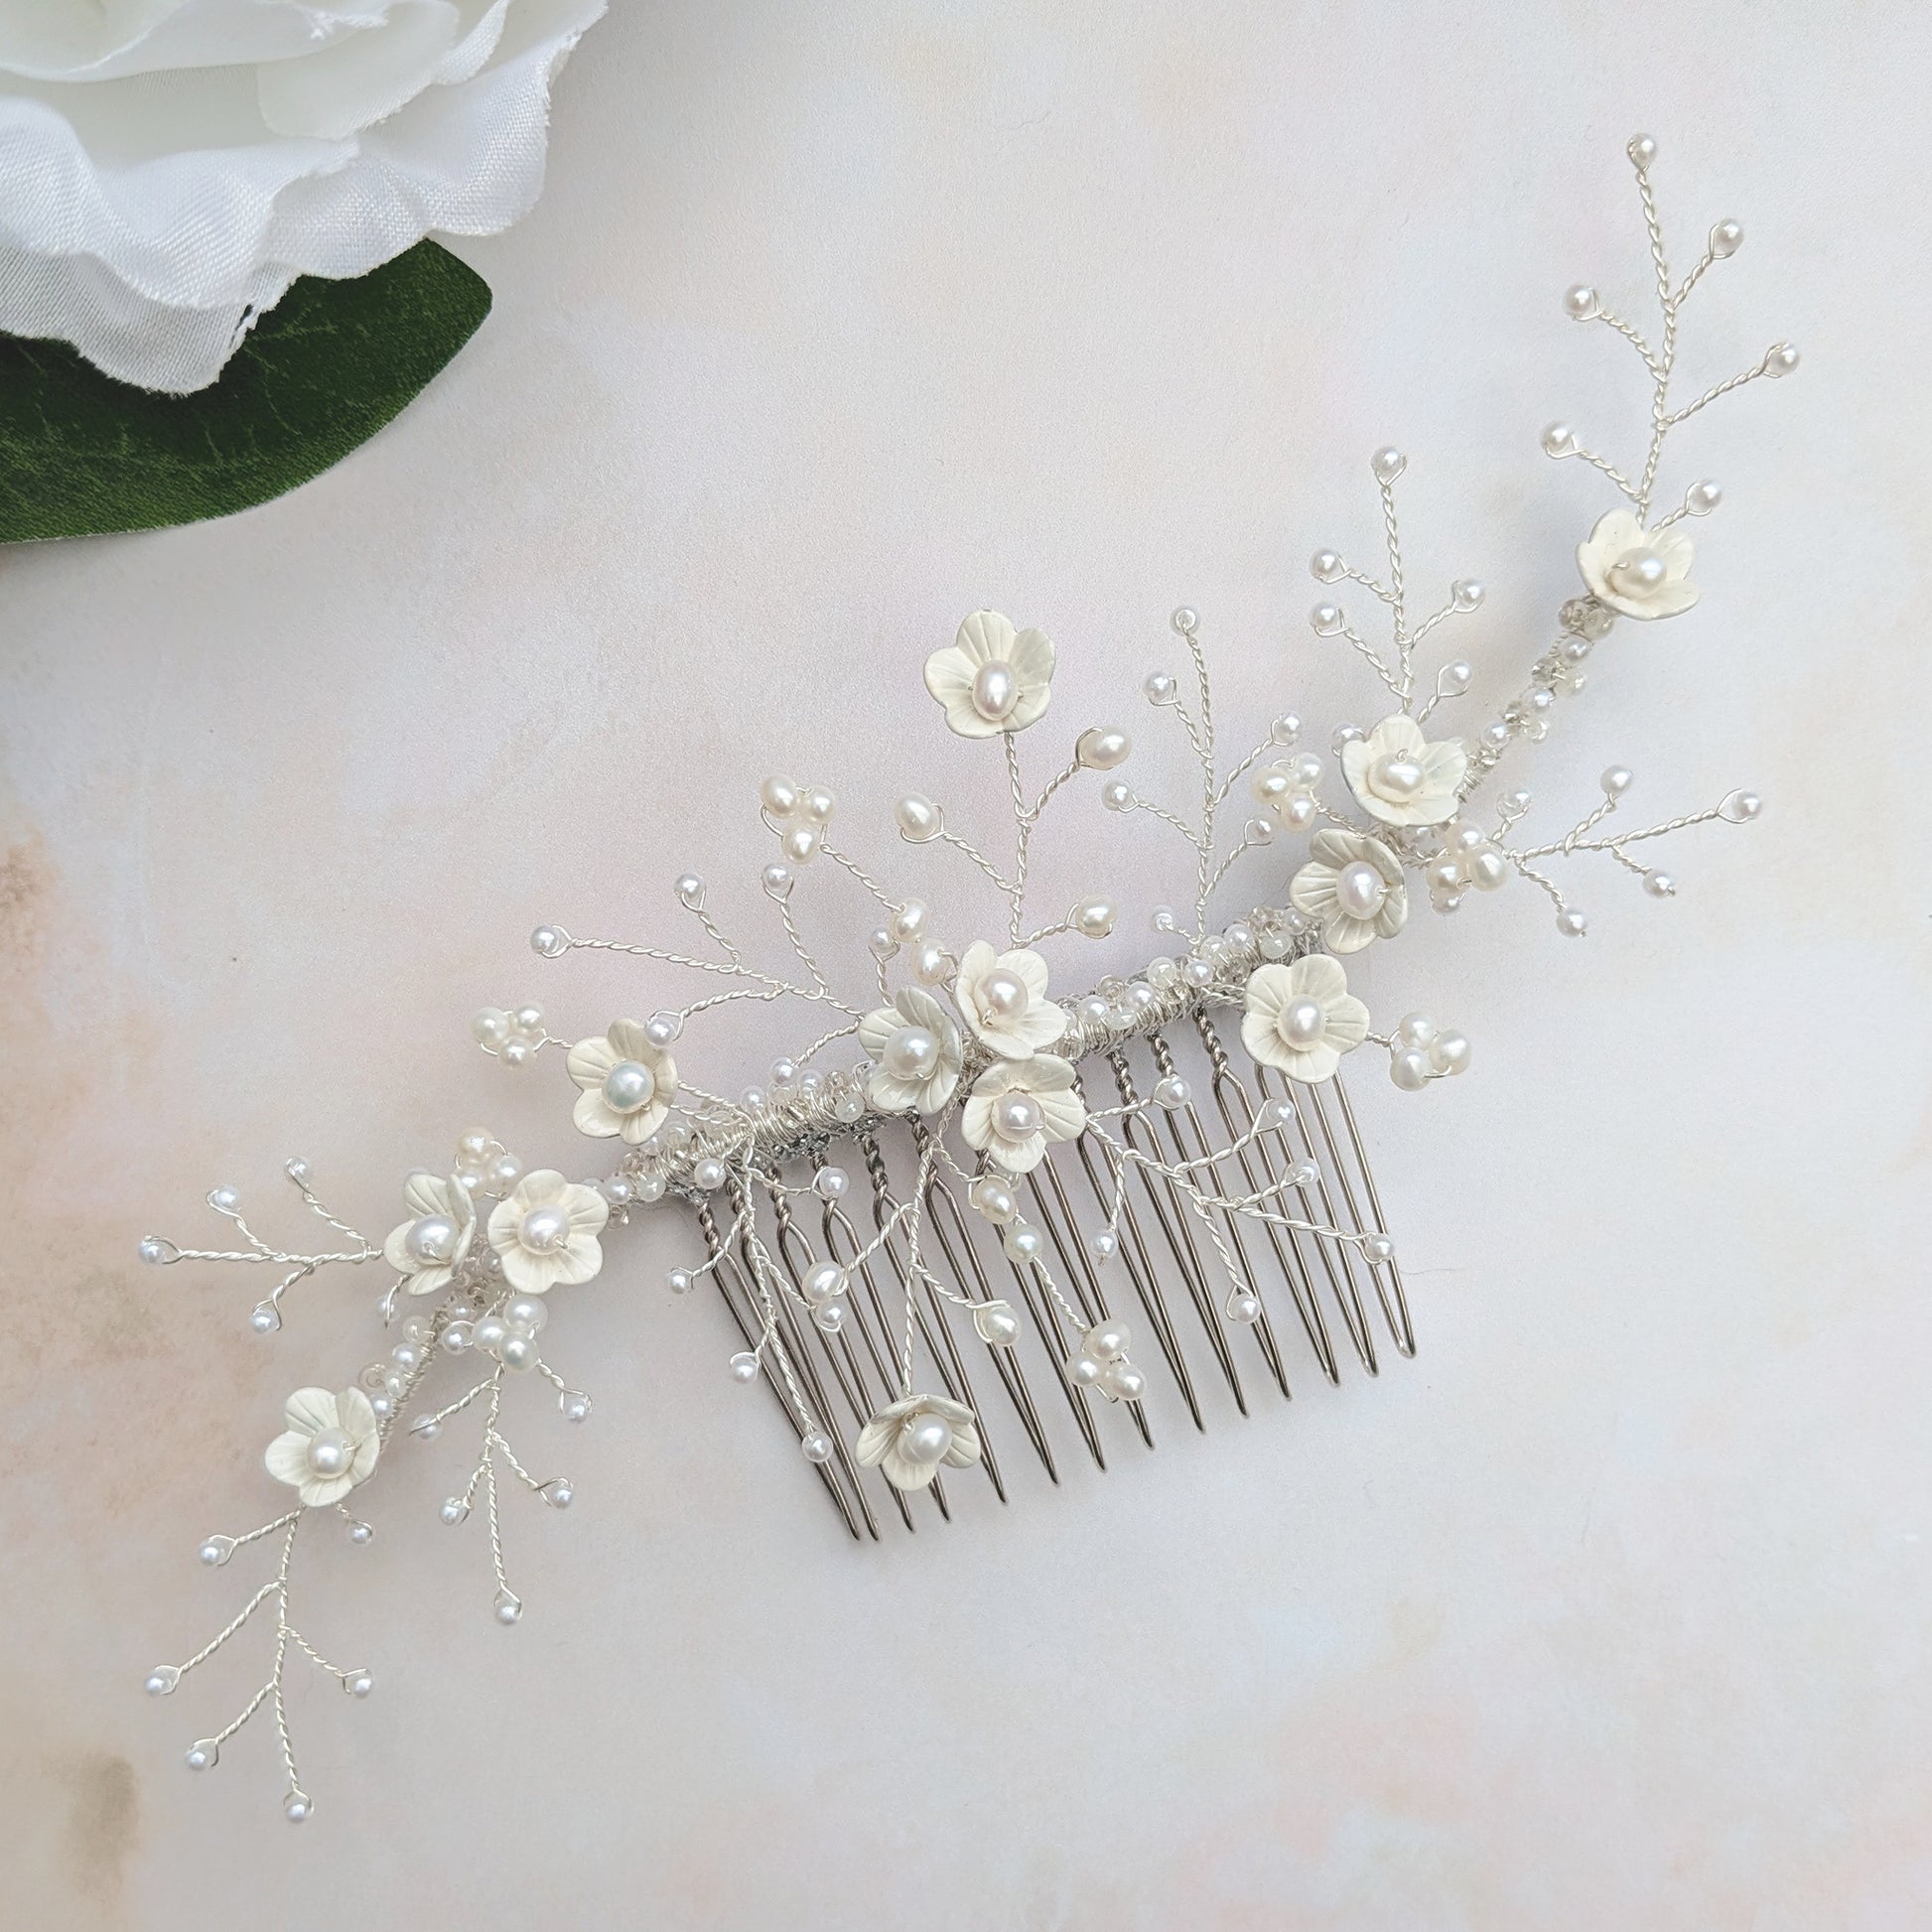 Floral headpiece for brides - Susie Warner